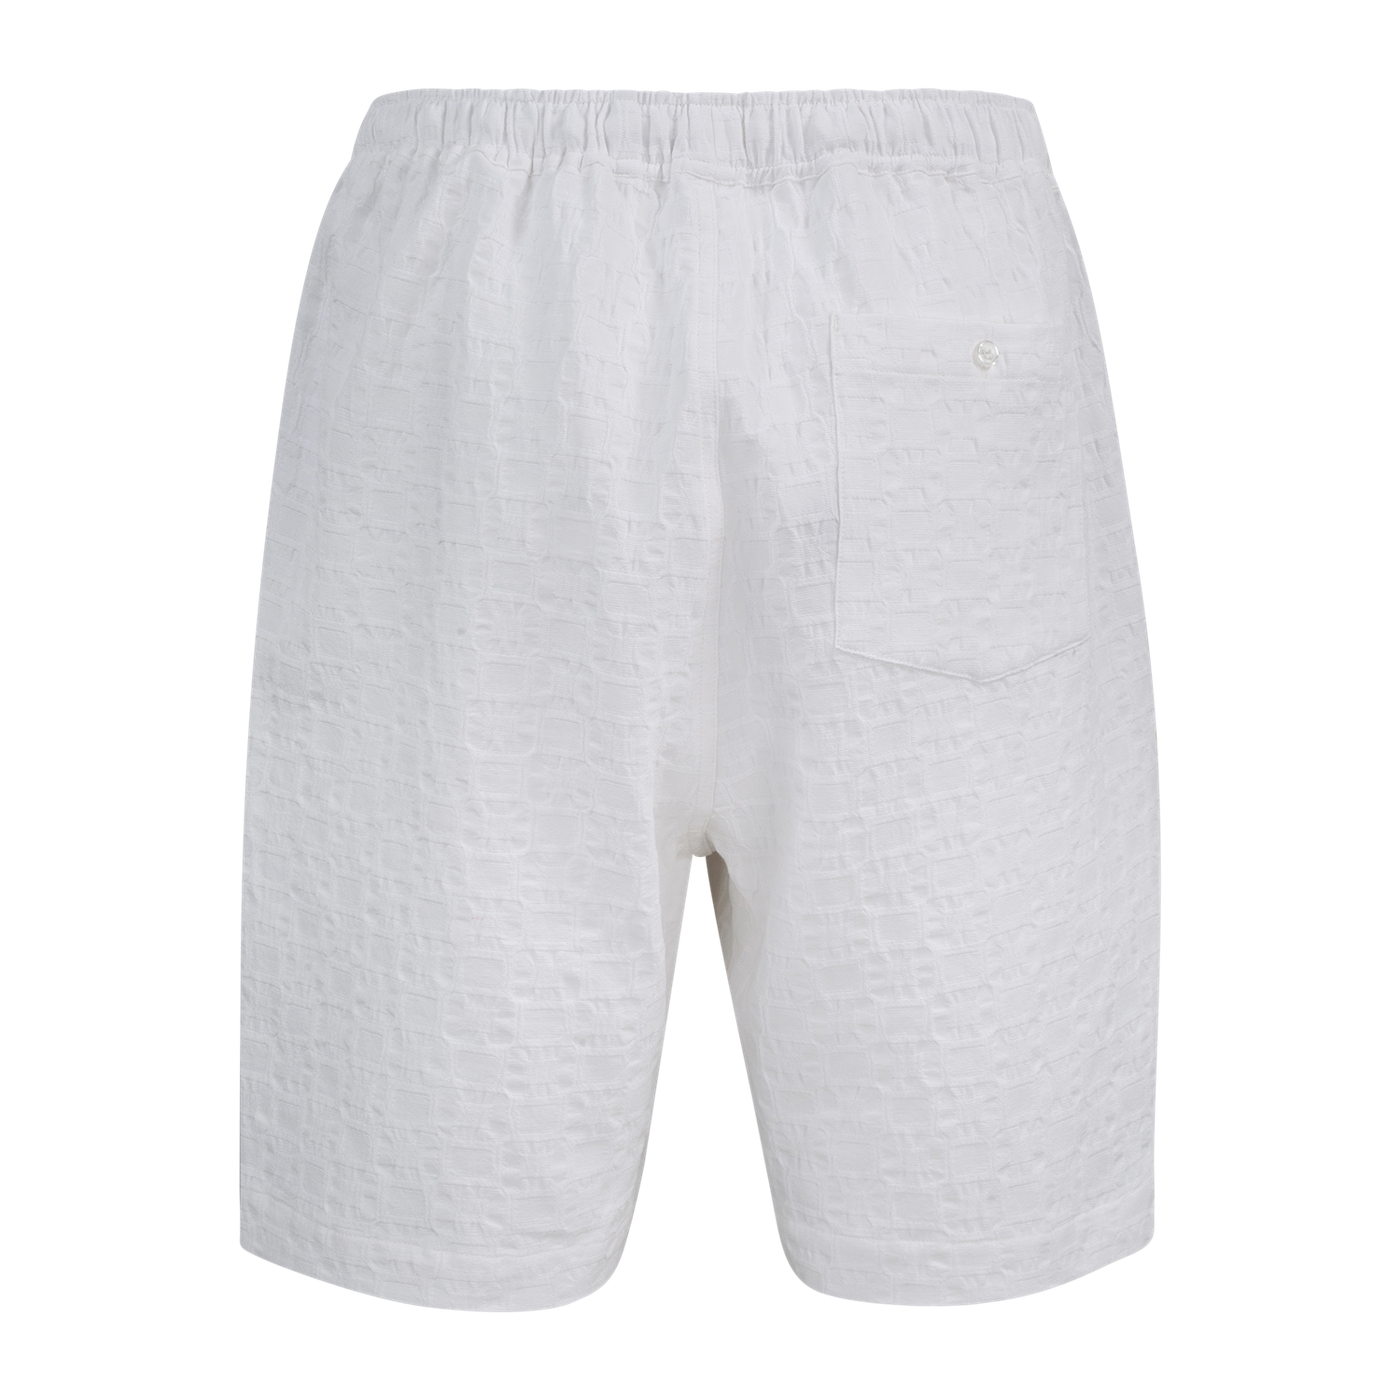 Milo shorts